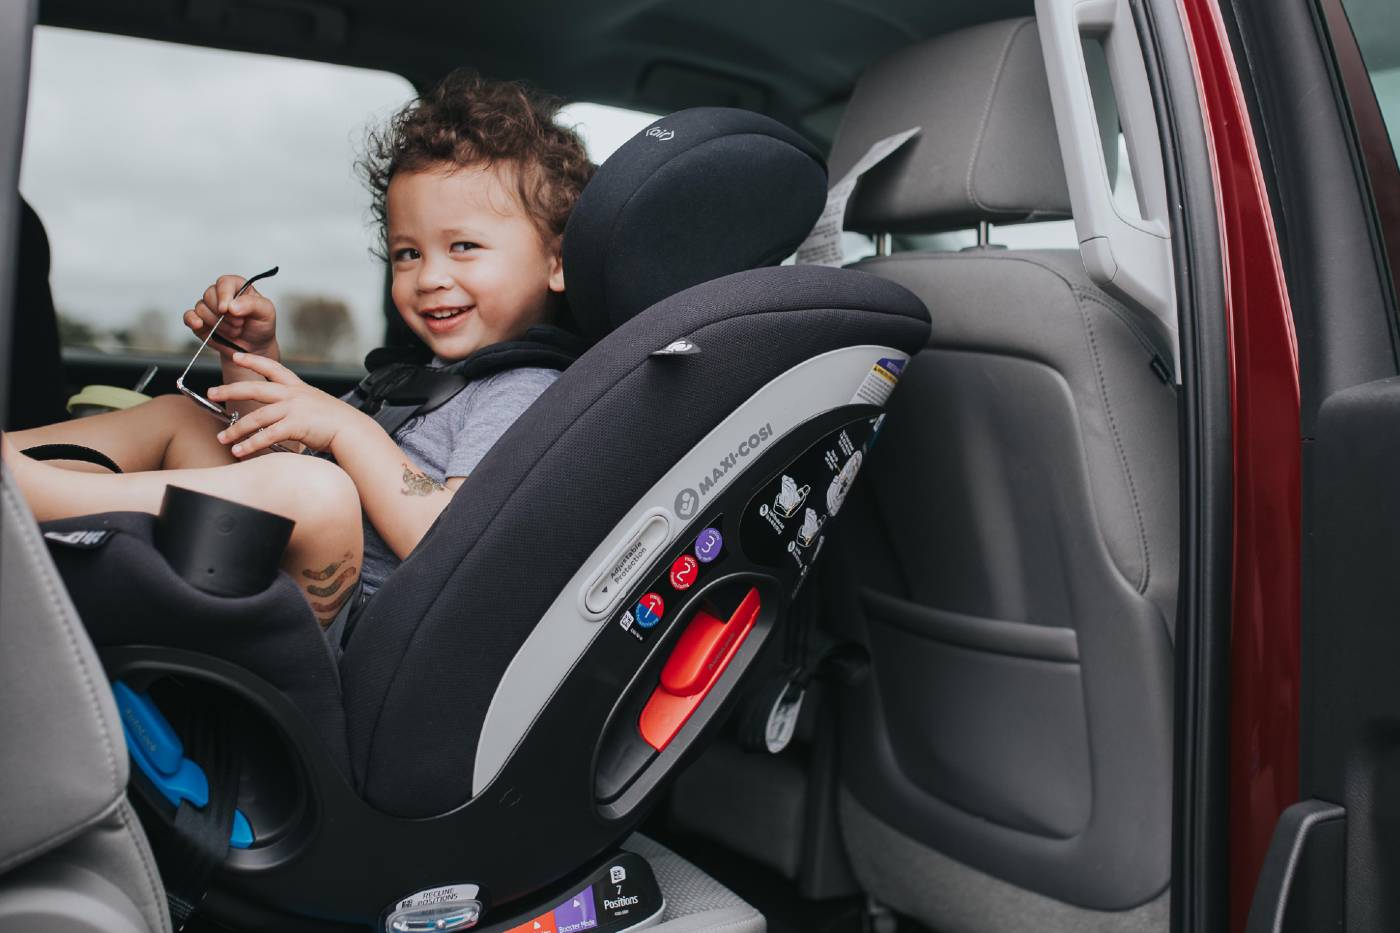 Car seat danger: Babies shouldn't sleep in car seats when not